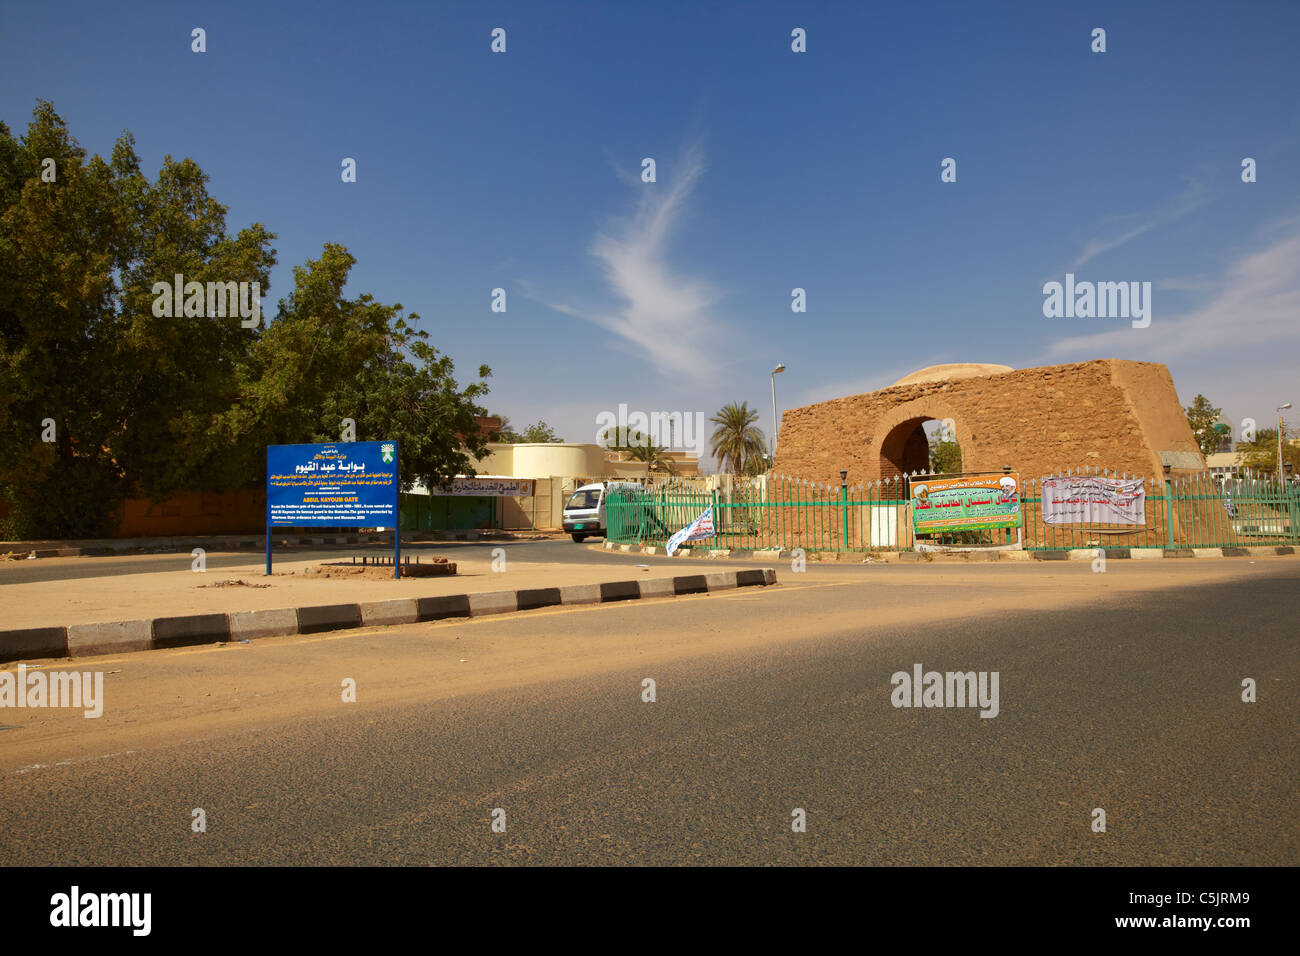 Abdul Kayoum Gate, Omdurman, Northern Sudan, Africa Stock Photo